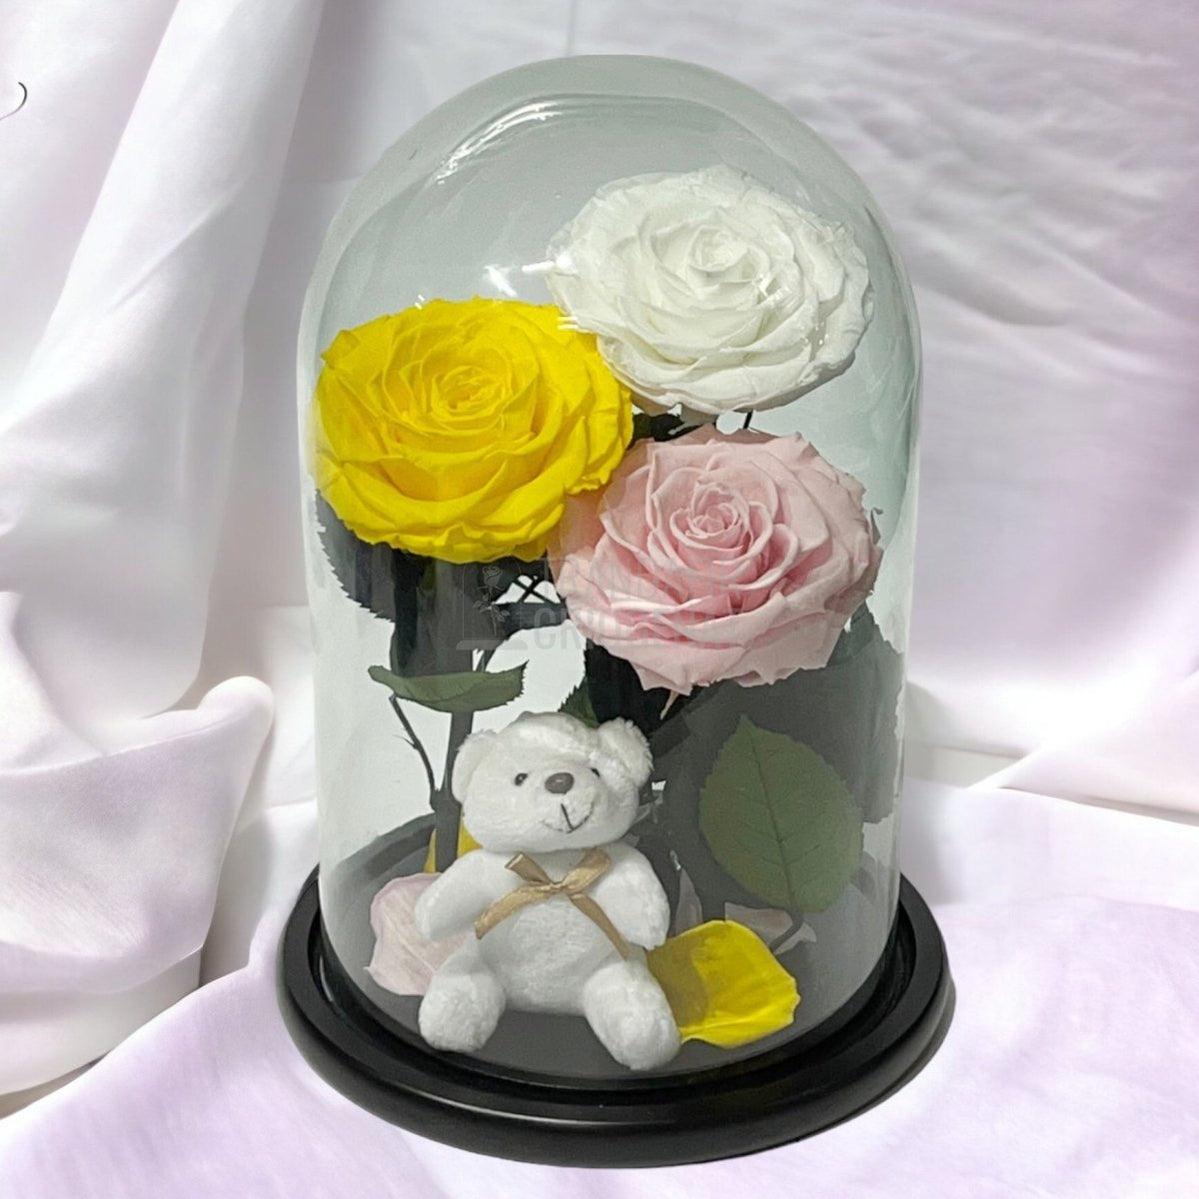 3 Trandafiri Criogenati mari, galben, alb, roz, cupola ursulet - Trandafir-Criogenat.ro